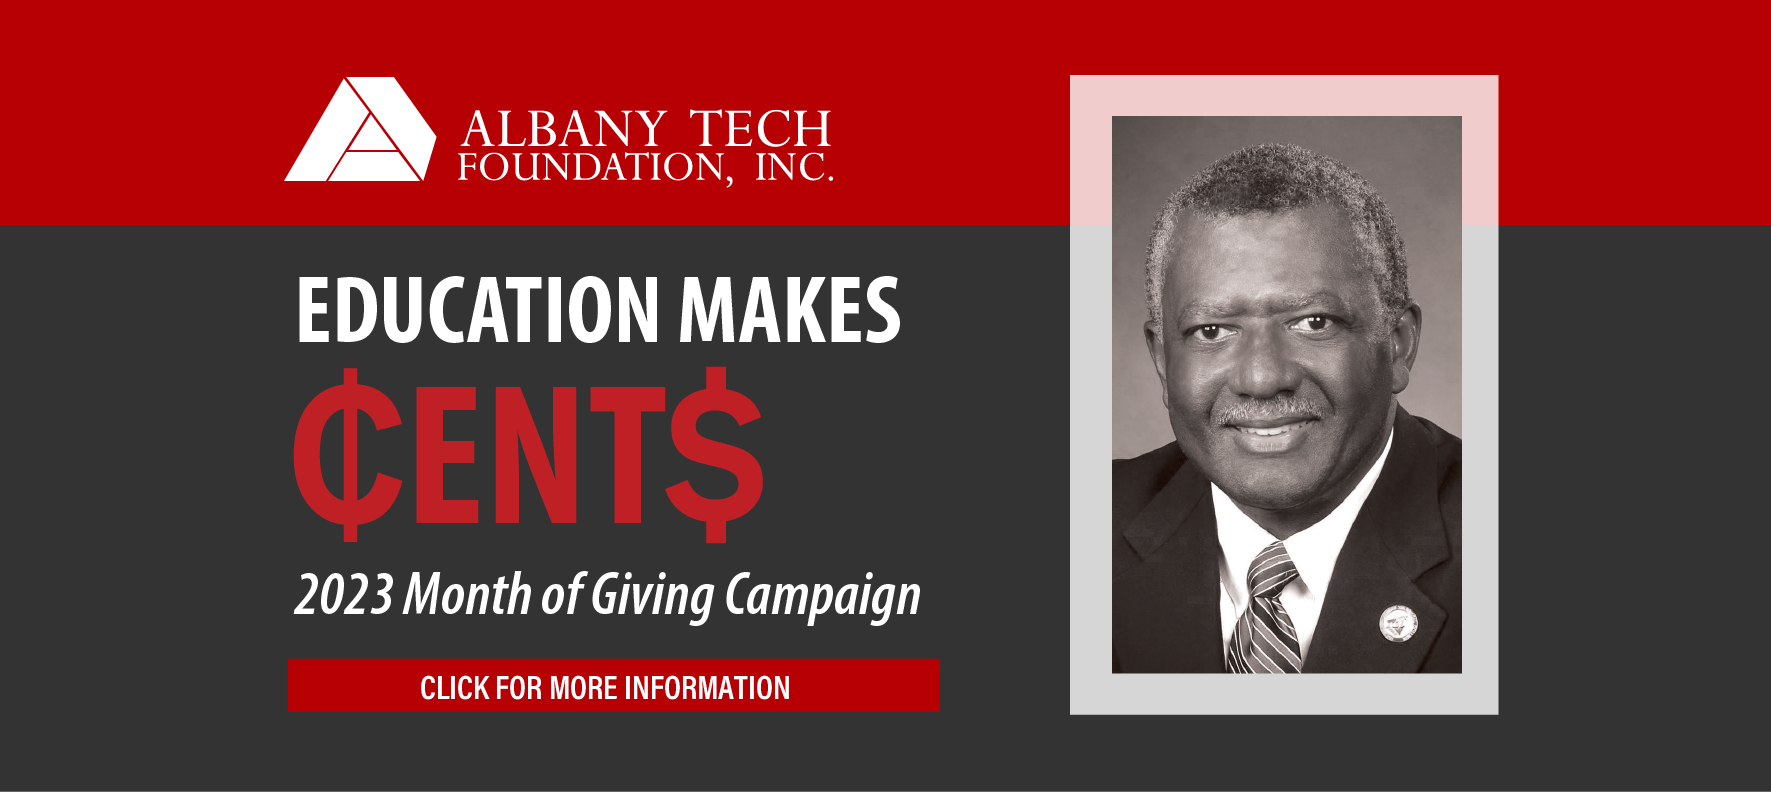 Albany Tech Foundation Inc. Education Makes Cents Fundraiser.